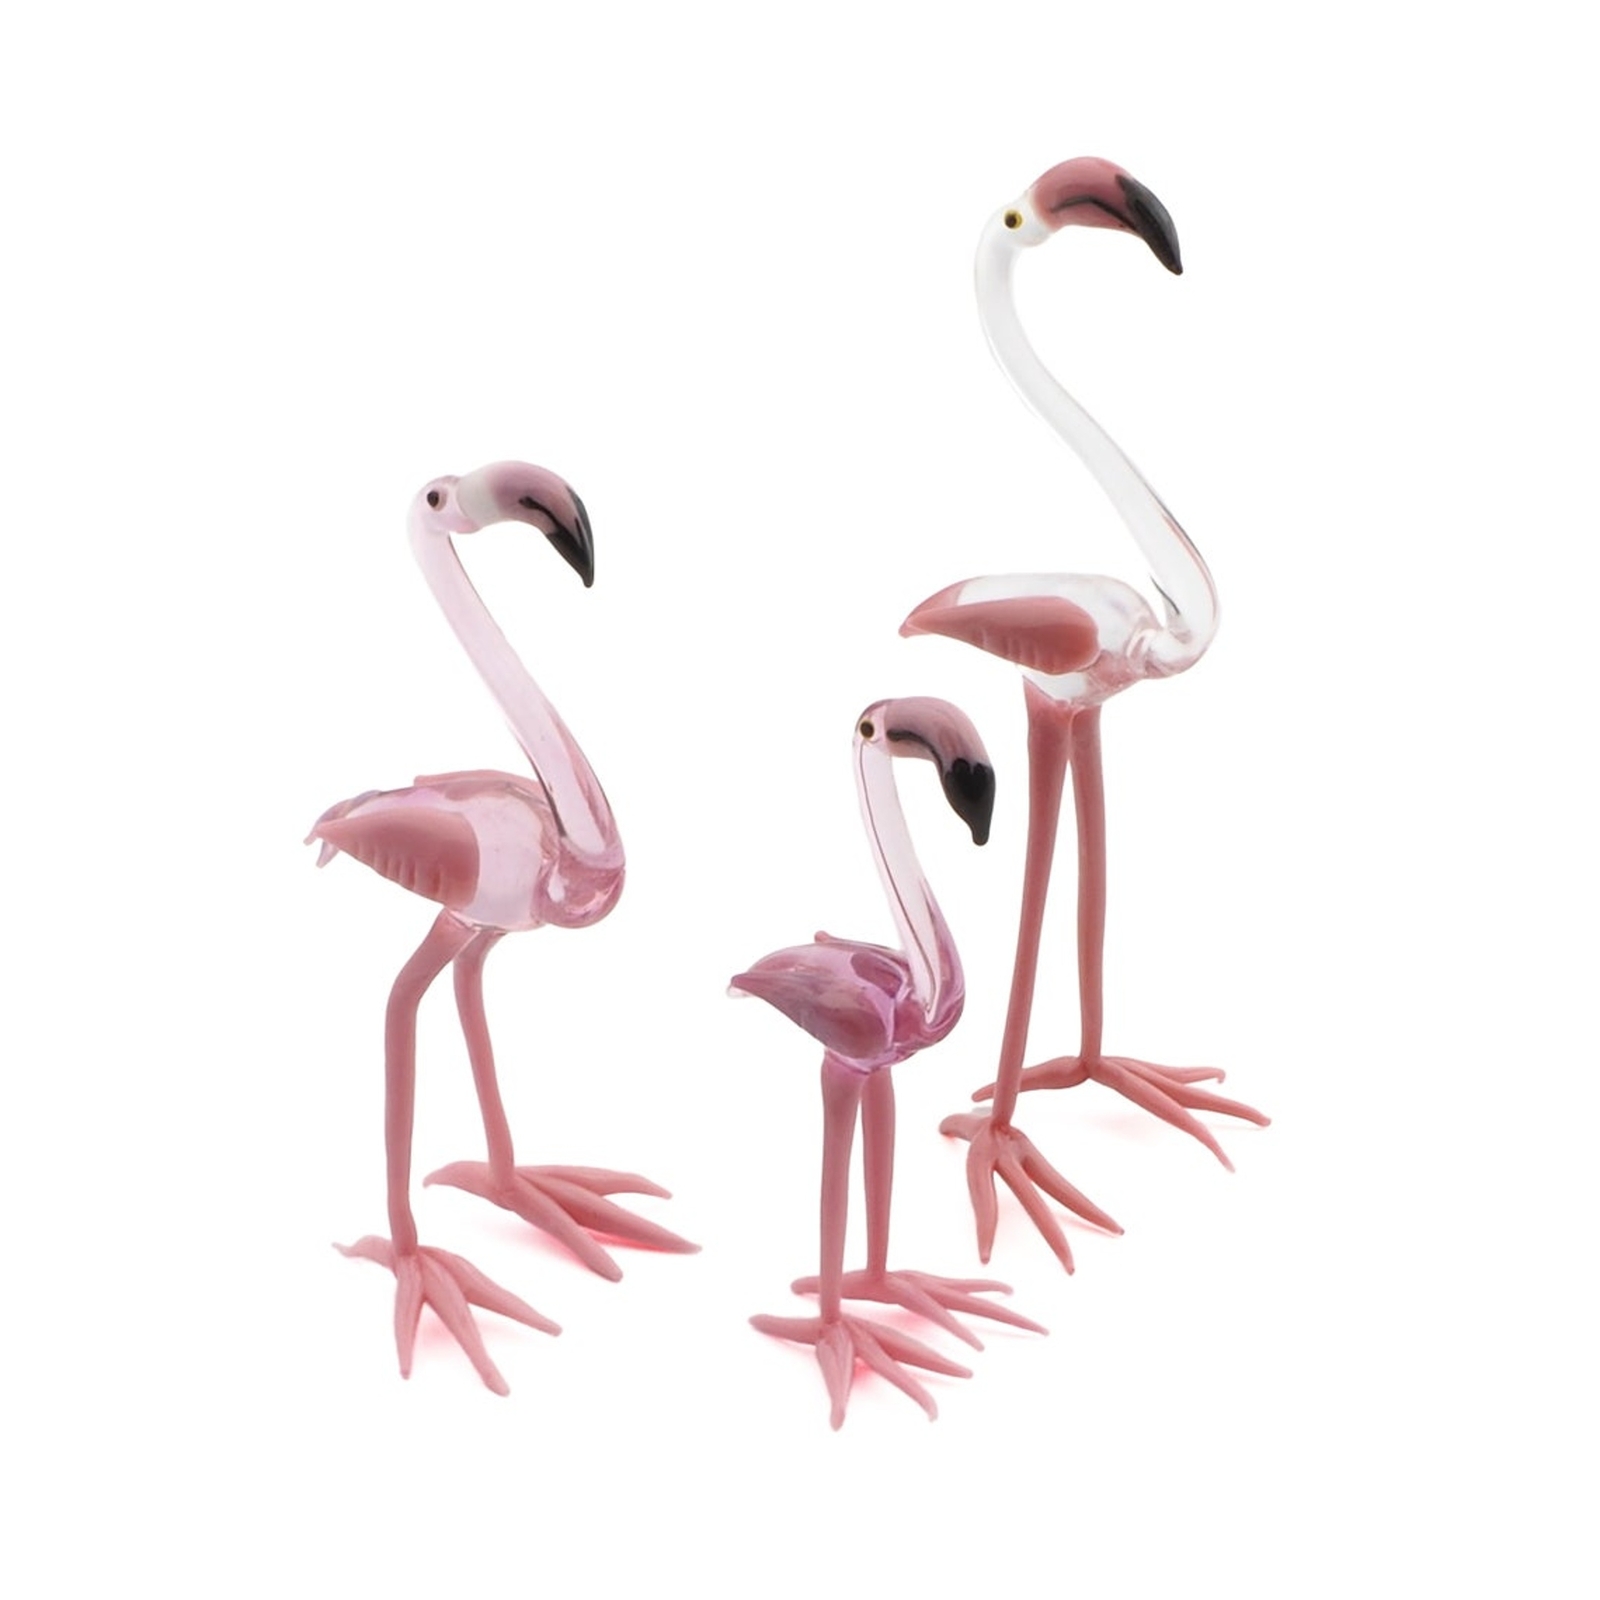 Family of (3) Czech lampwork glass miniature Flamingo bird Family figurines ornaments